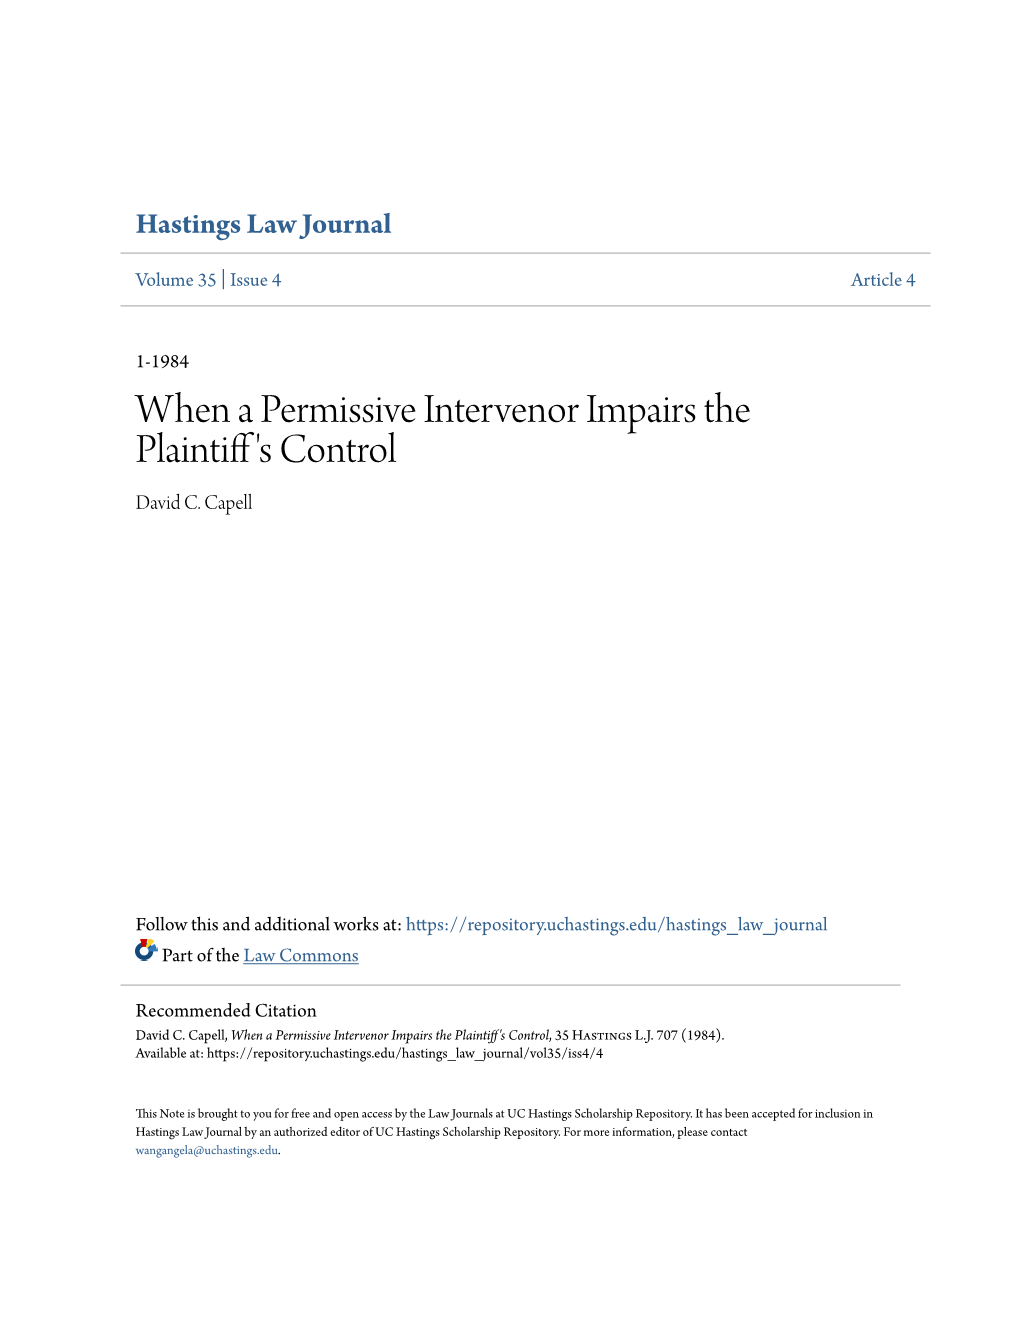 When a Permissive Intervenor Impairs the Plaintiff's Control, 35 Hastings L.J